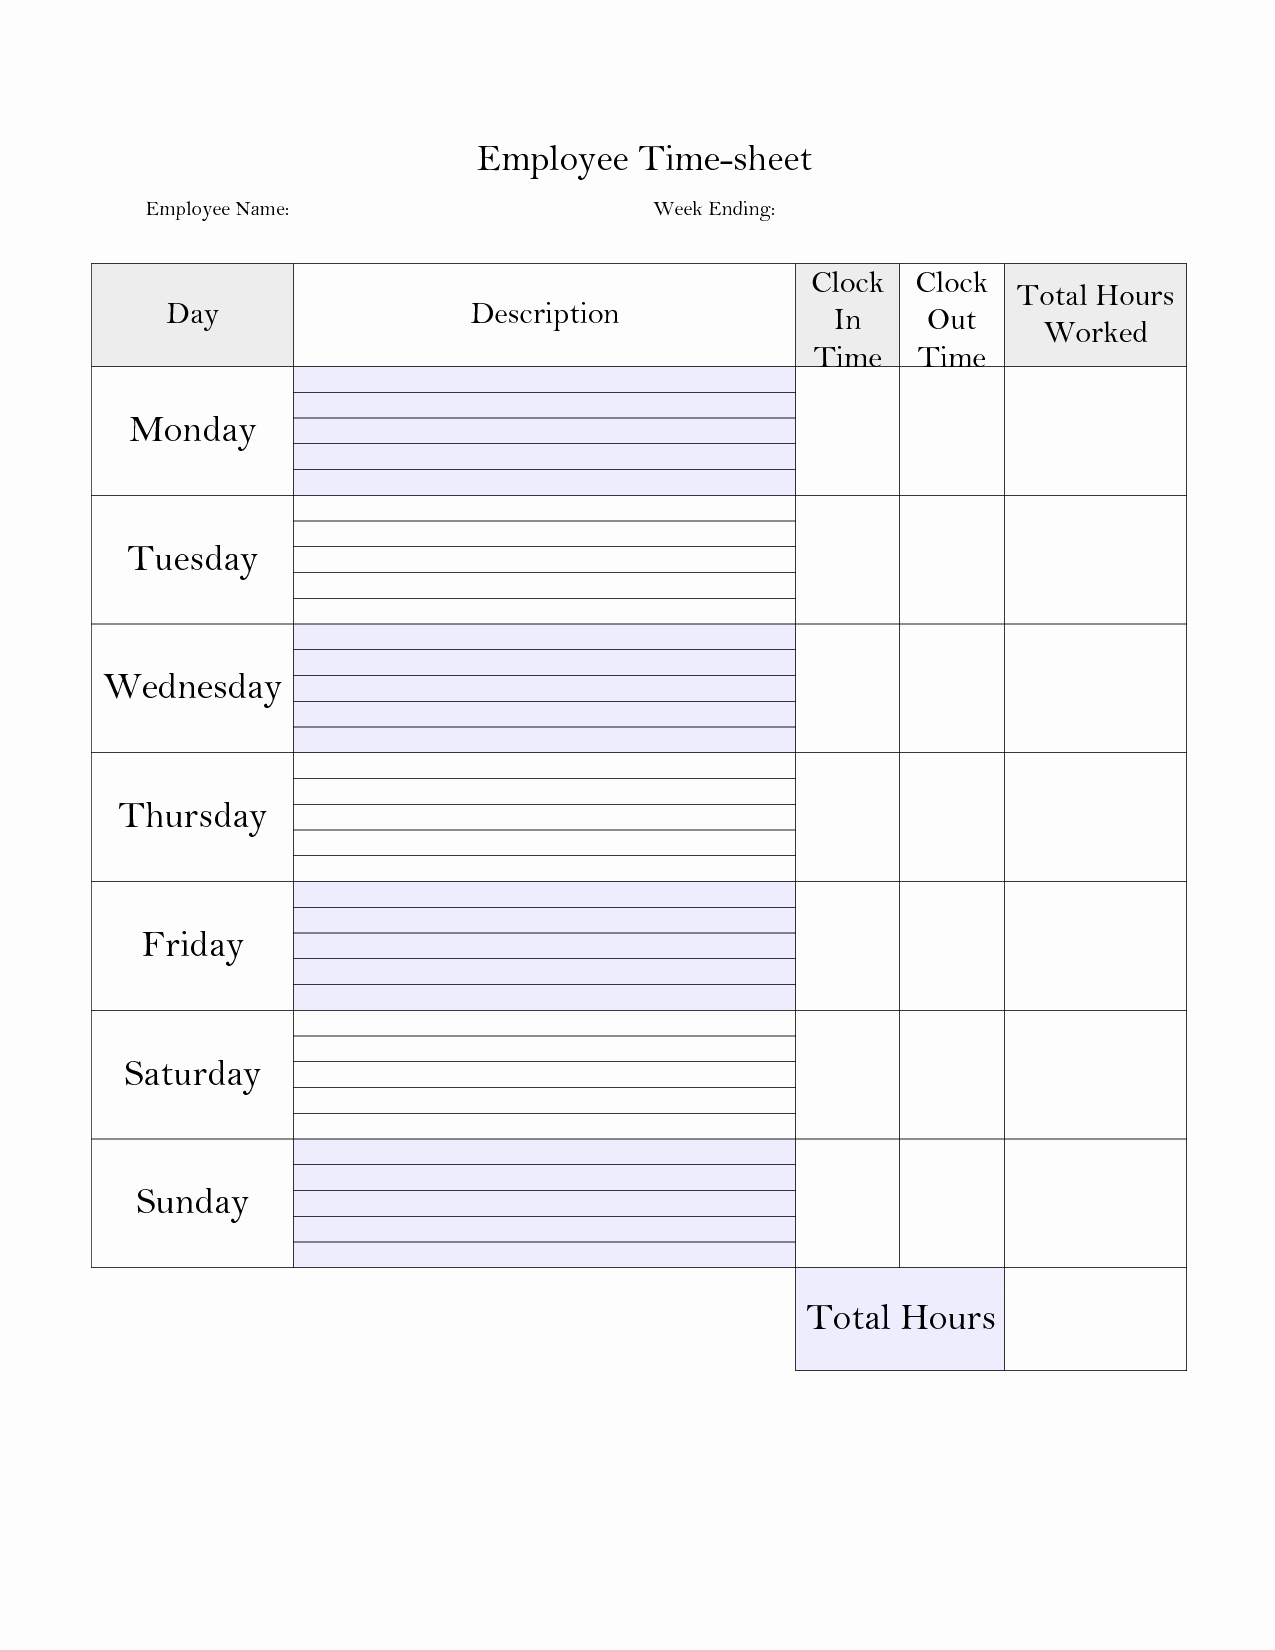 printable-home-caregiver-timesheet-daily-log-sheet-gerald-printable